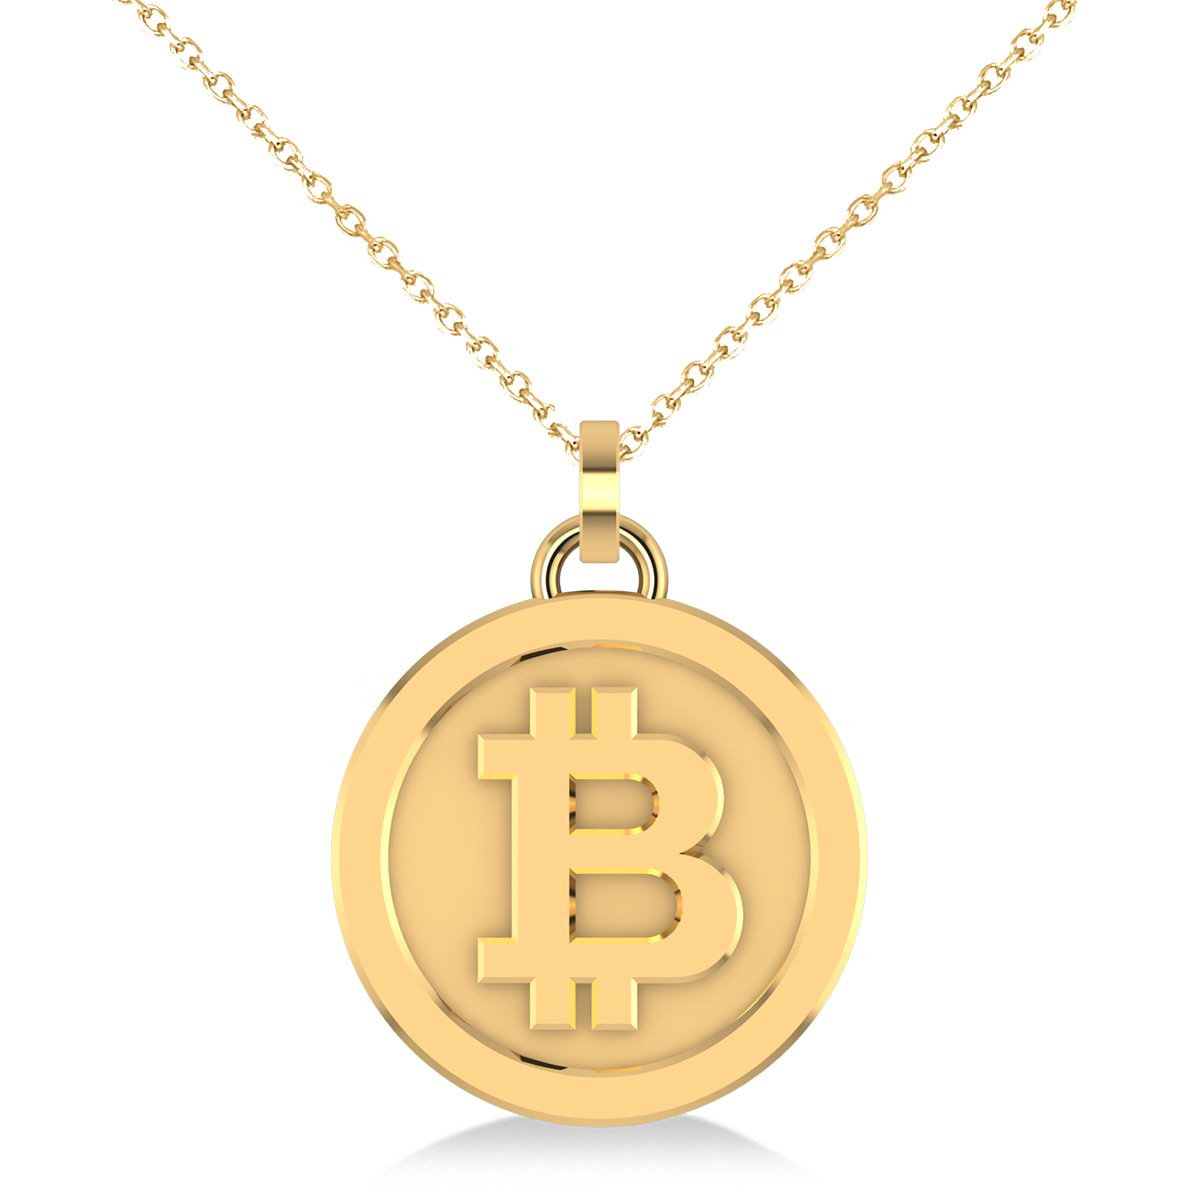 Medium Cryptocurrency Bitcoin Pendant Necklace